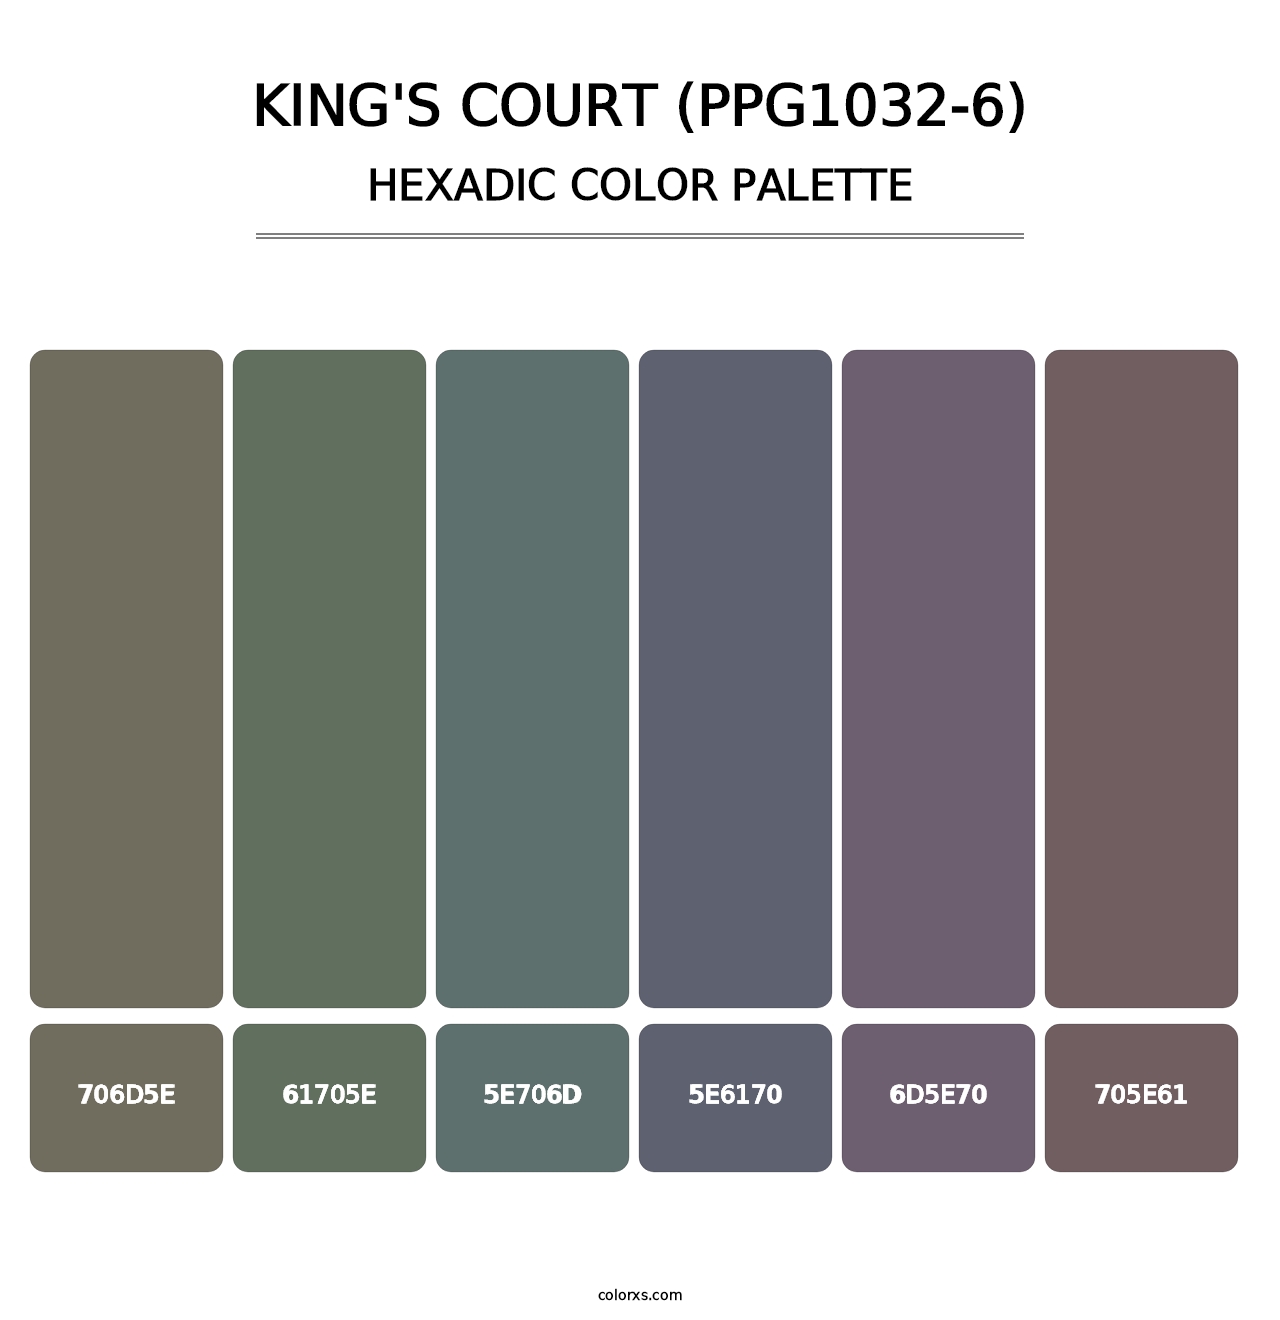 King's Court (PPG1032-6) - Hexadic Color Palette